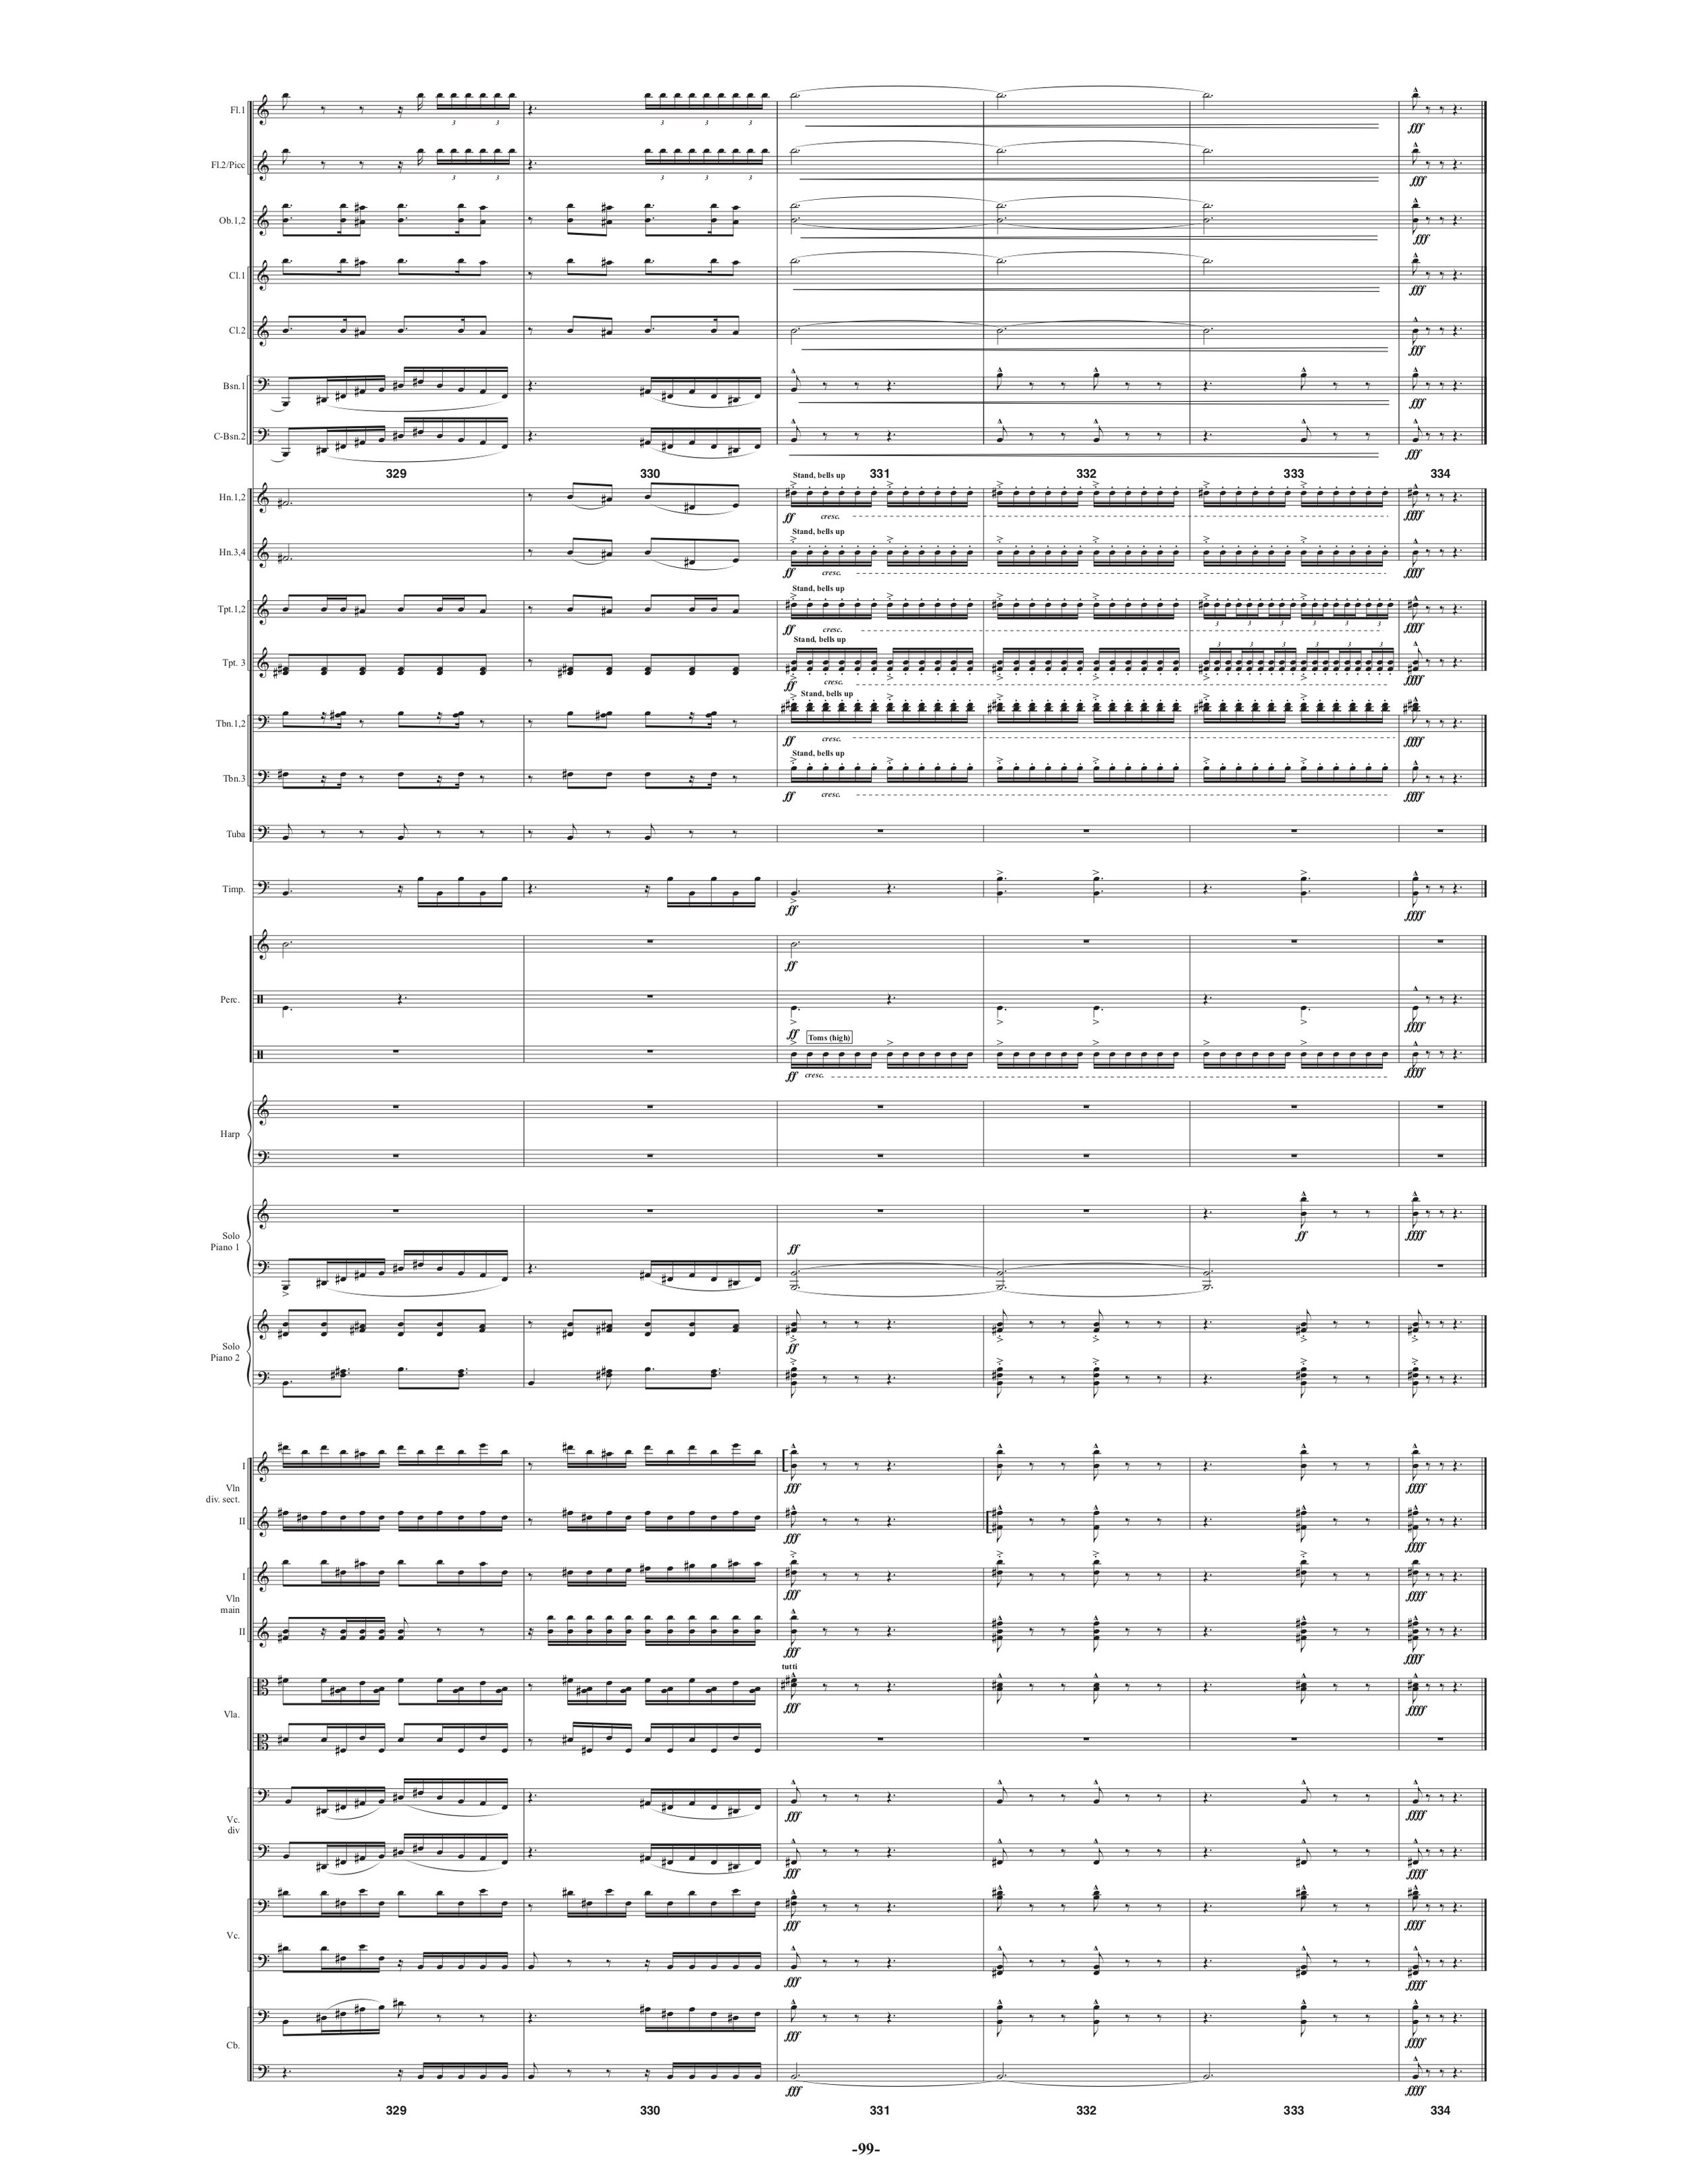 Symphony_Orch & 2 Pianos p104.jpg